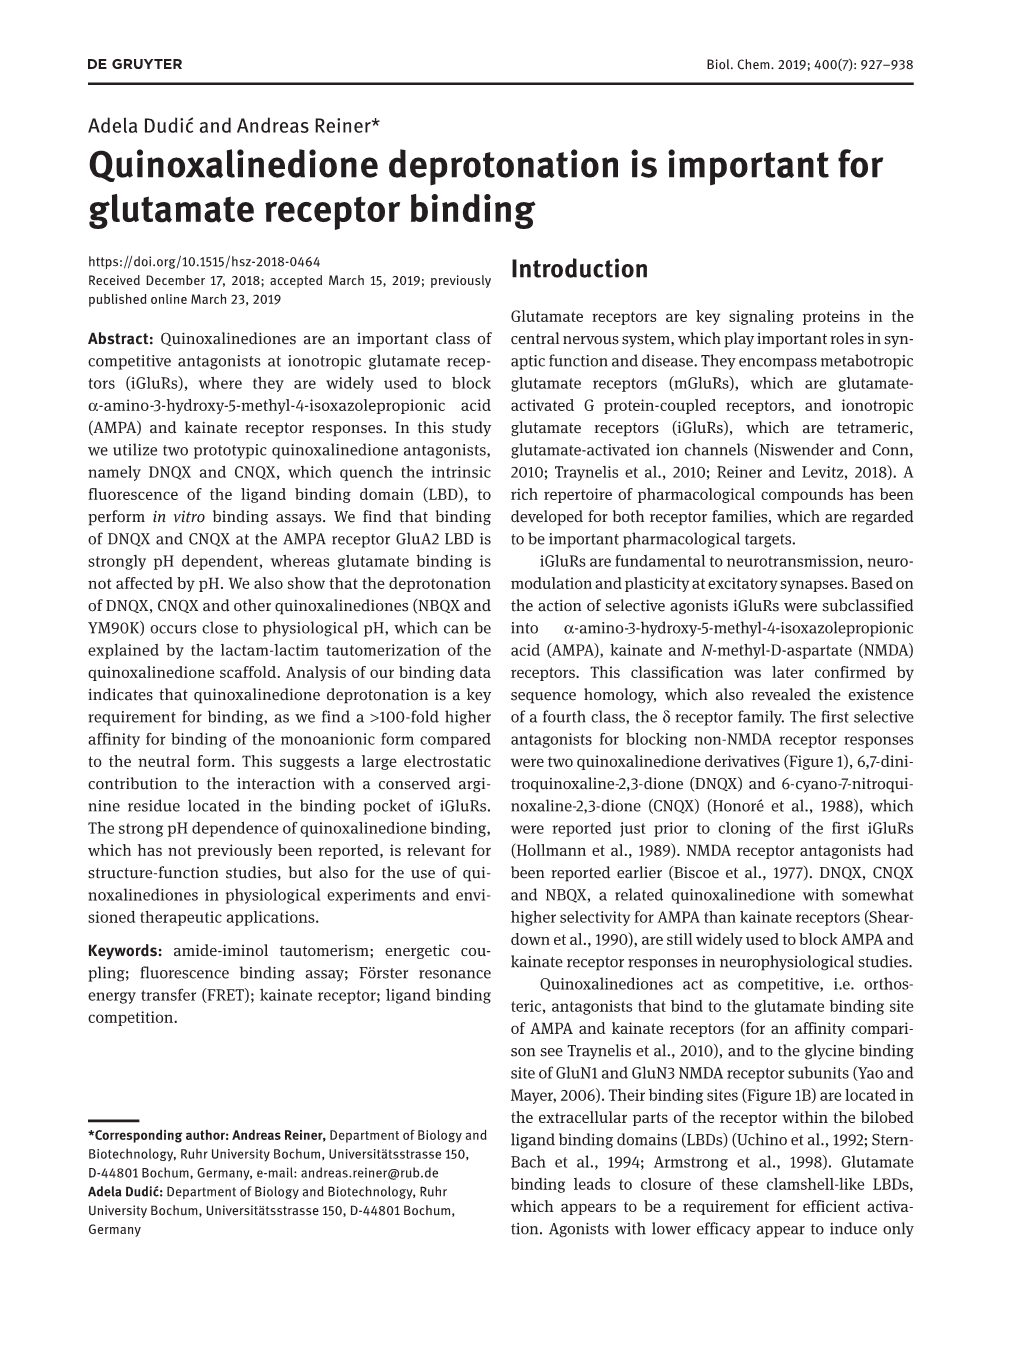 Quinoxalinedione Deprotonation Is Important for Glutamate Receptor